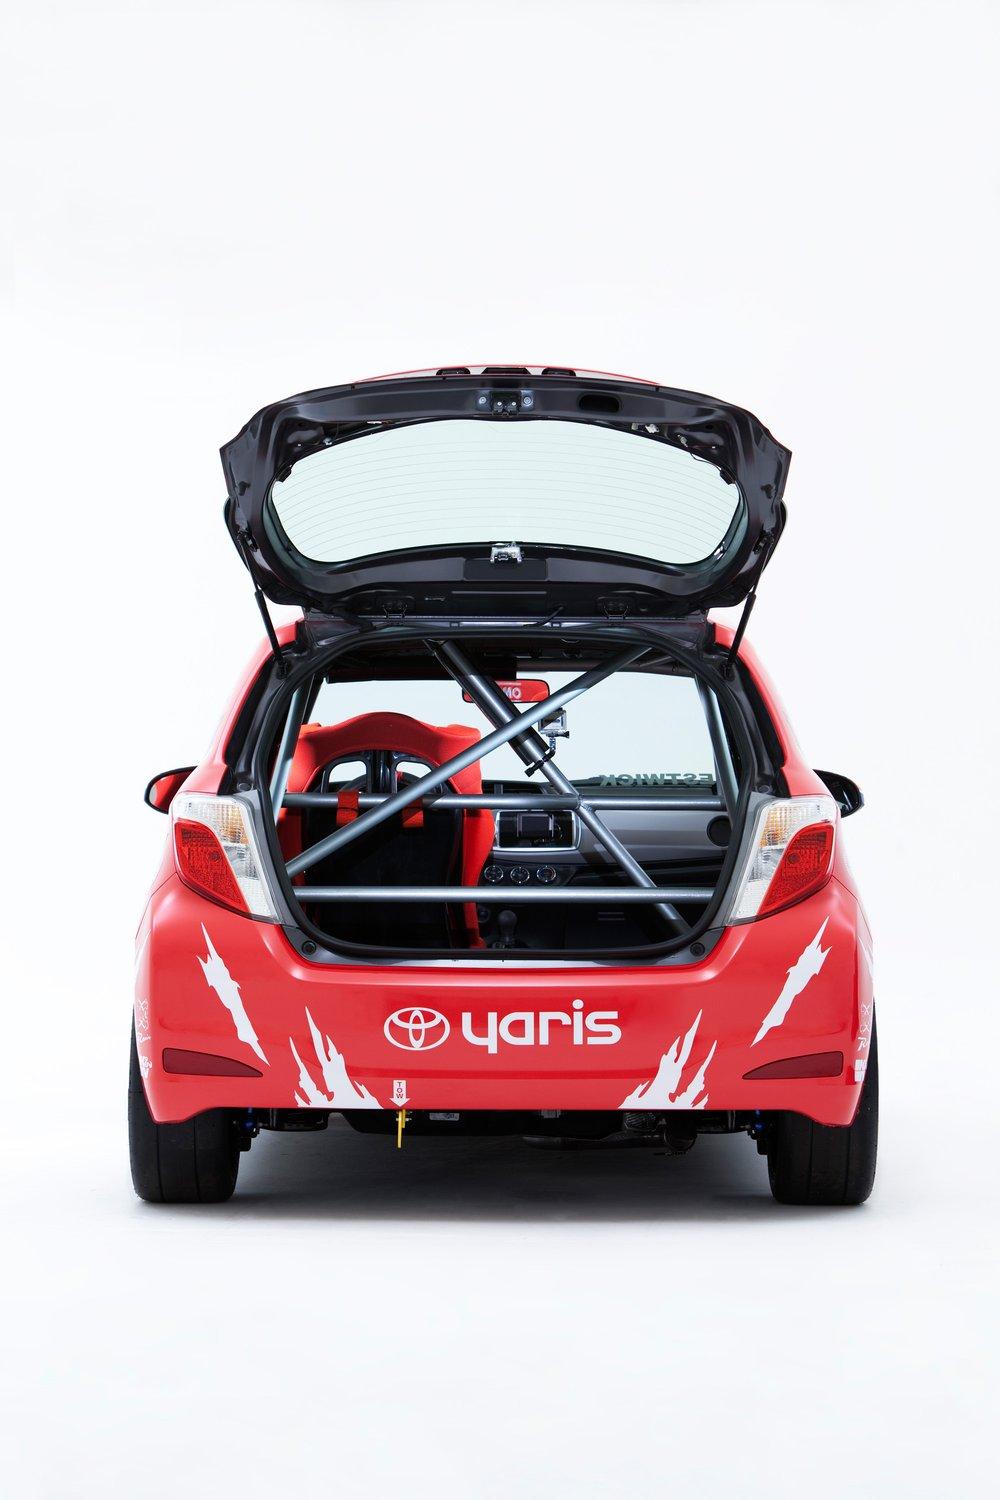 Toyota Yaris B-Spec Club Racer